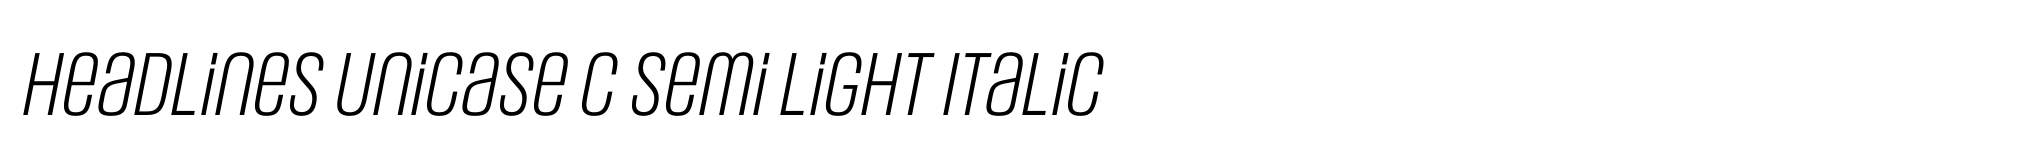 Headlines Unicase C Semi Light Italic image